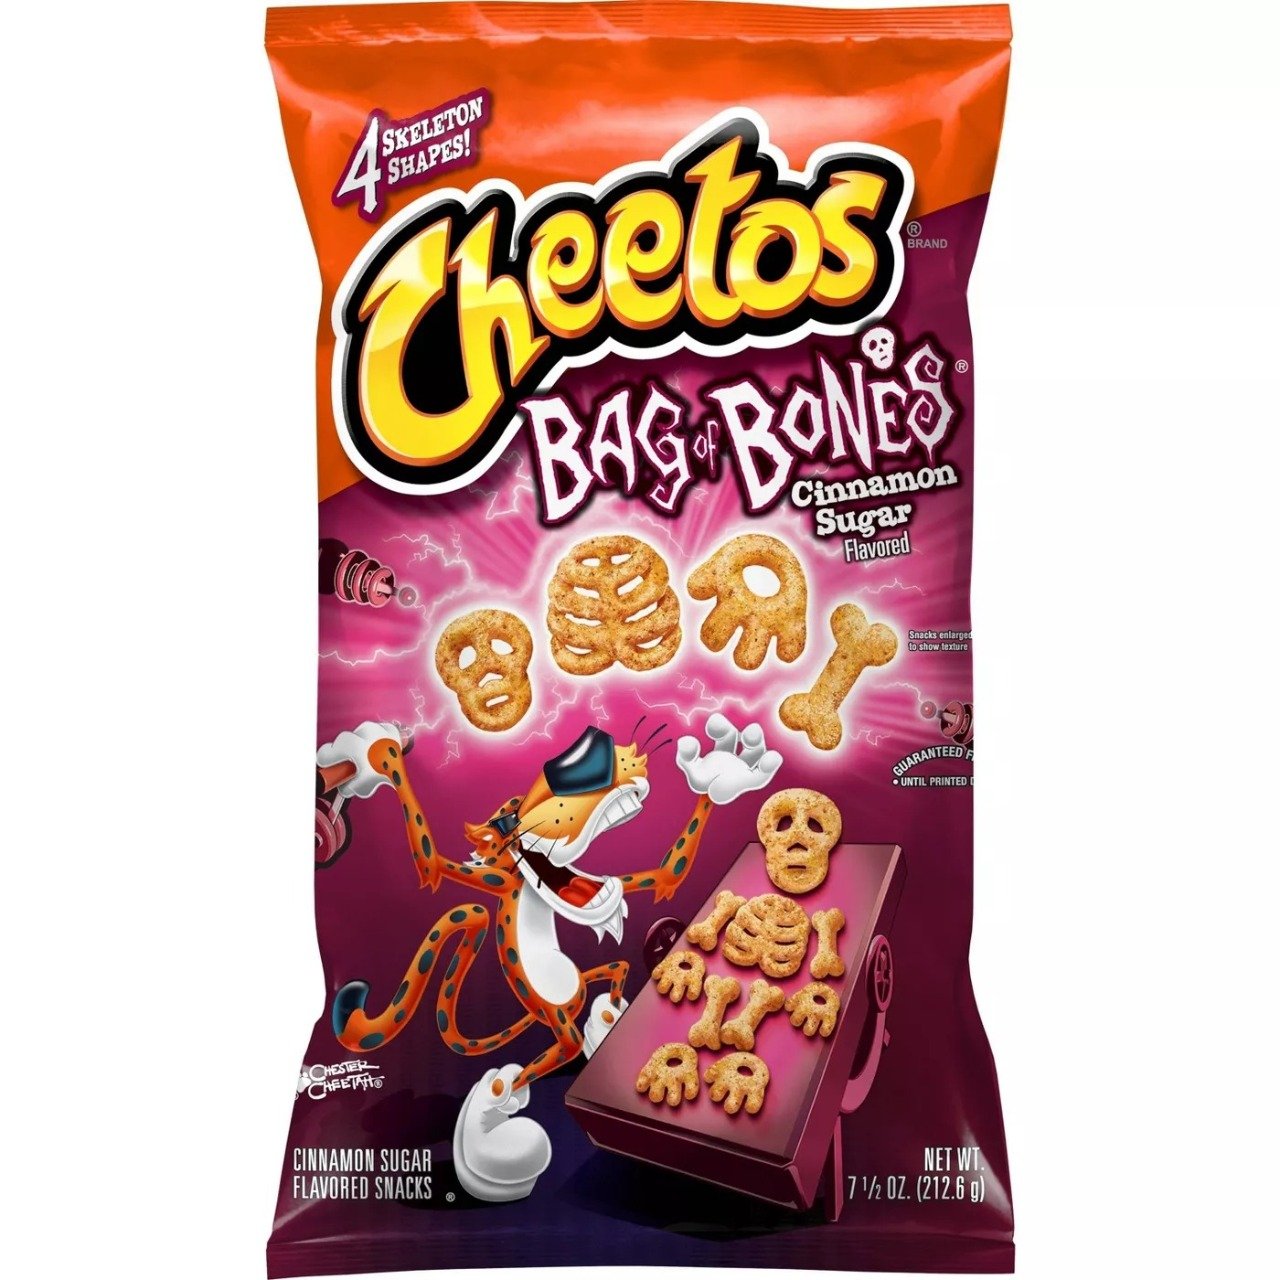 Cheetos Sweetos Bag of Bones - Cinnamon Sugar